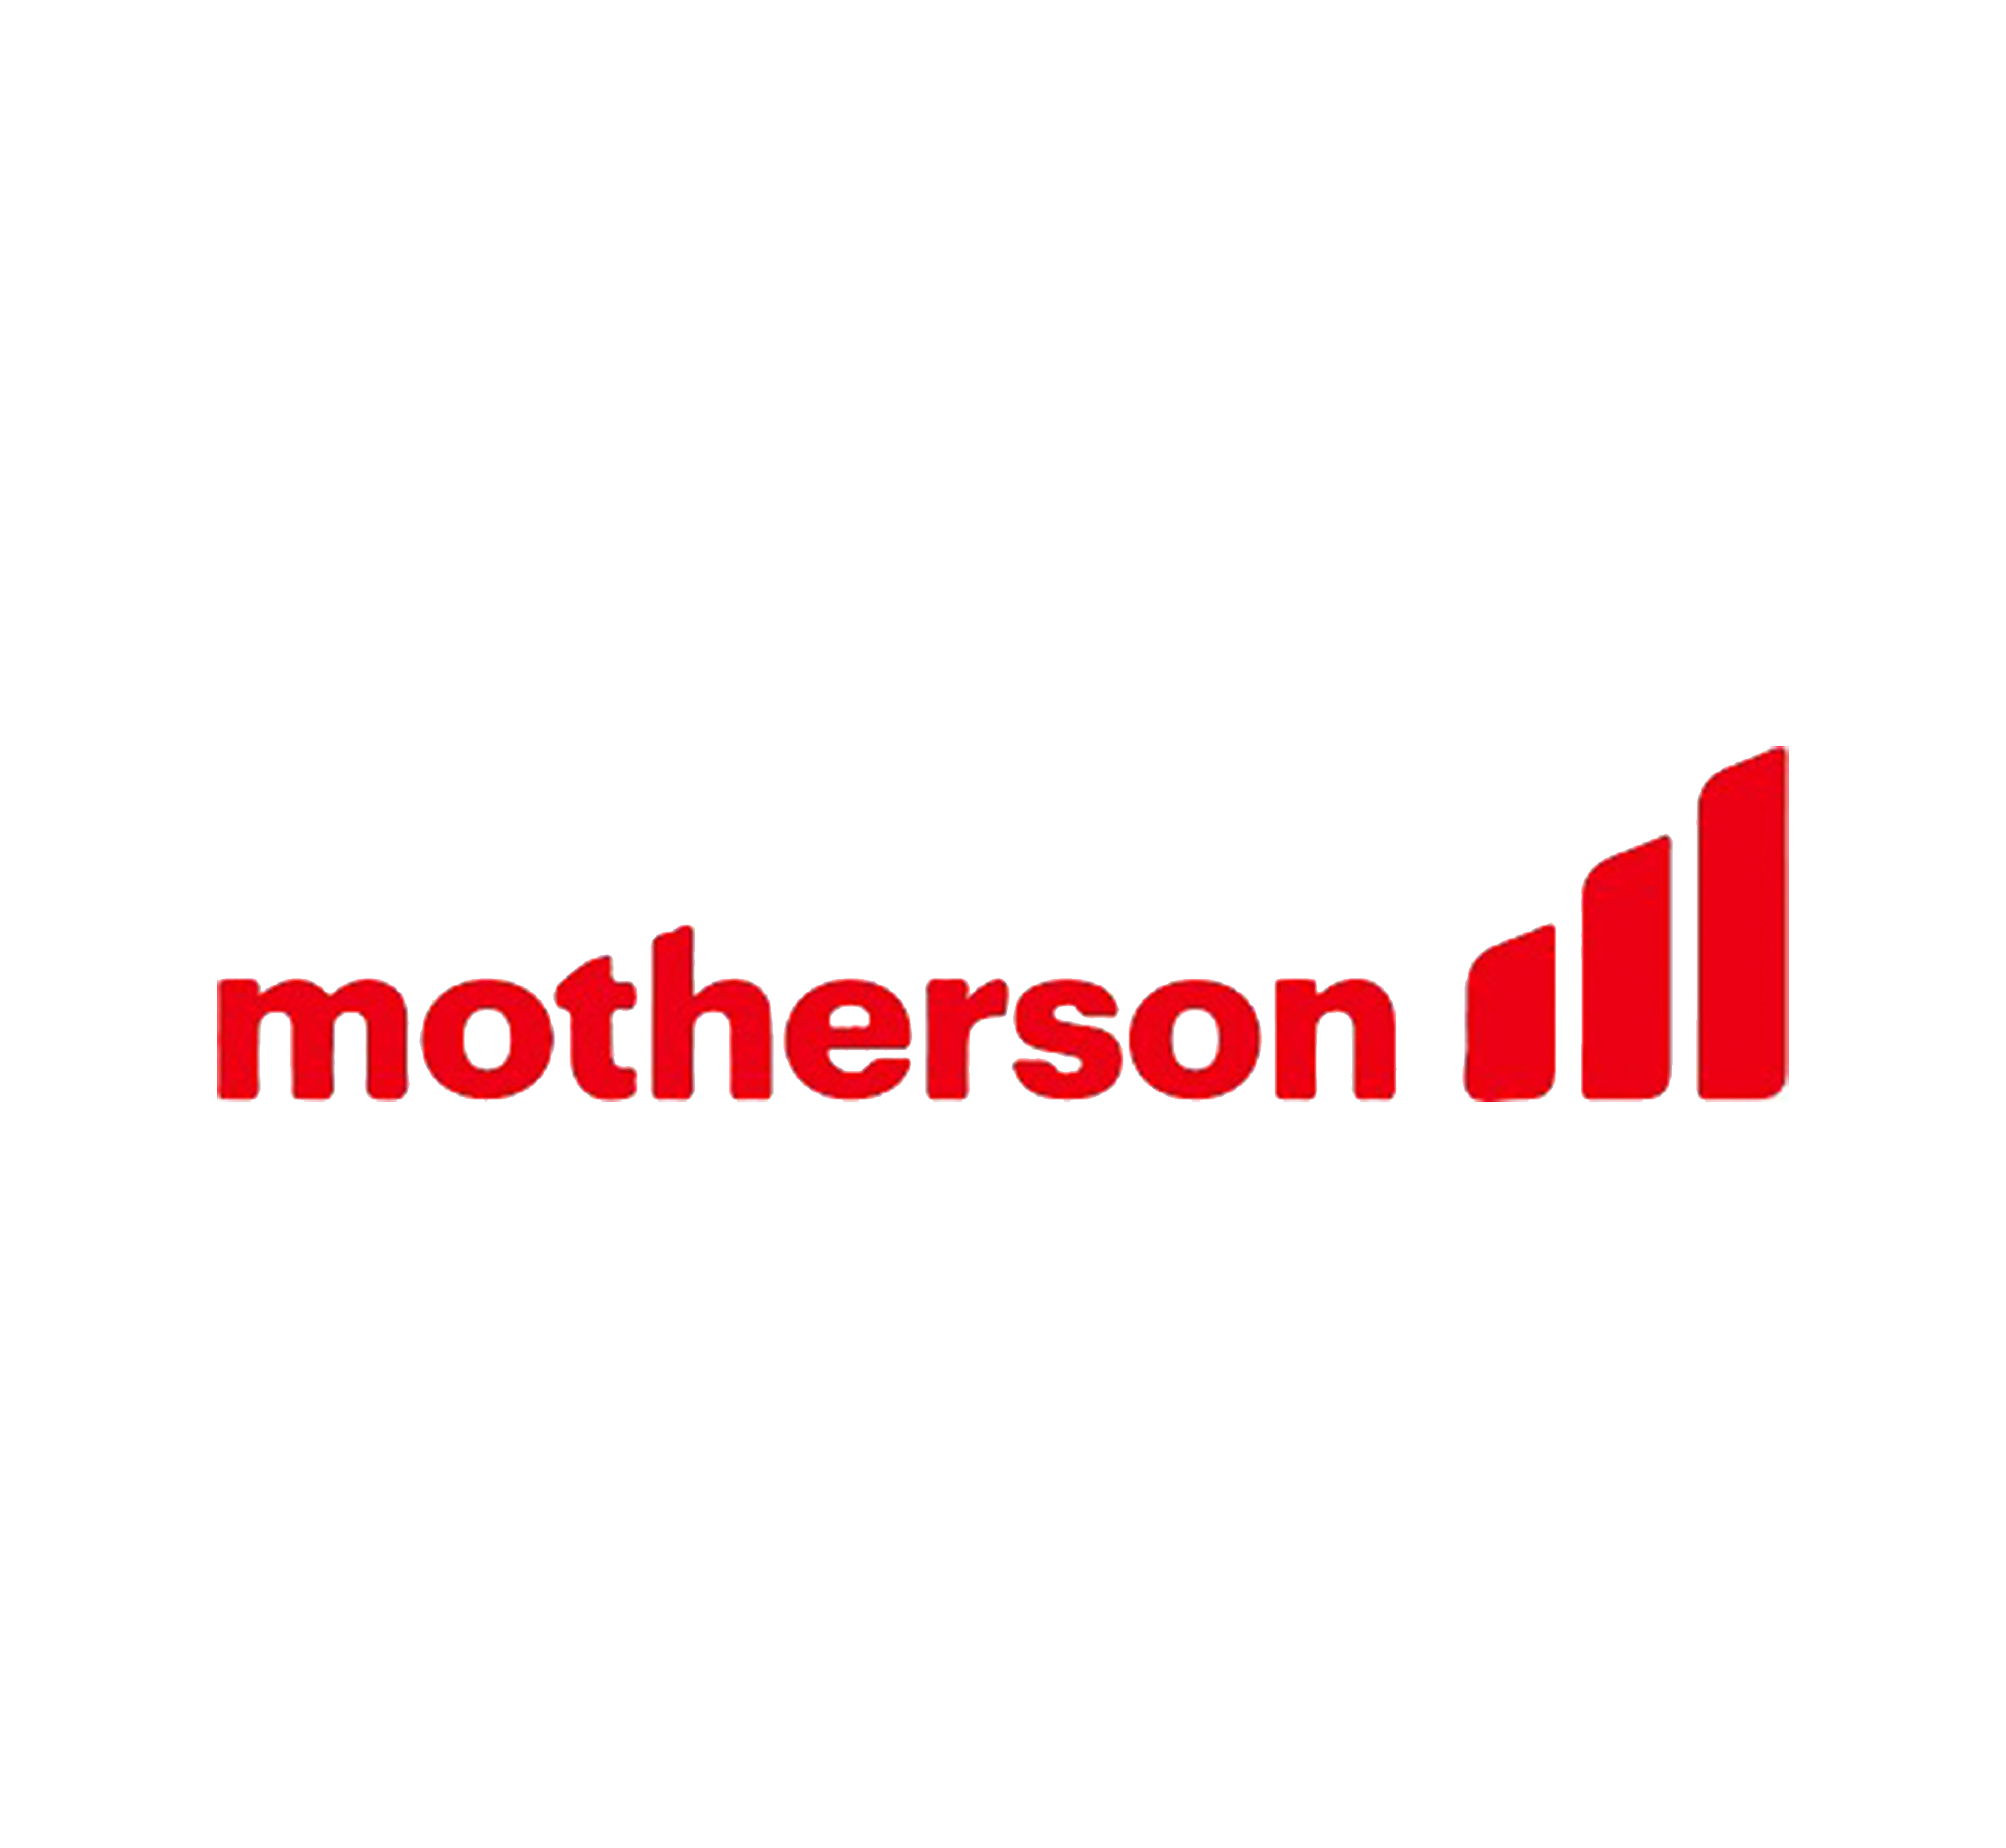 motherson